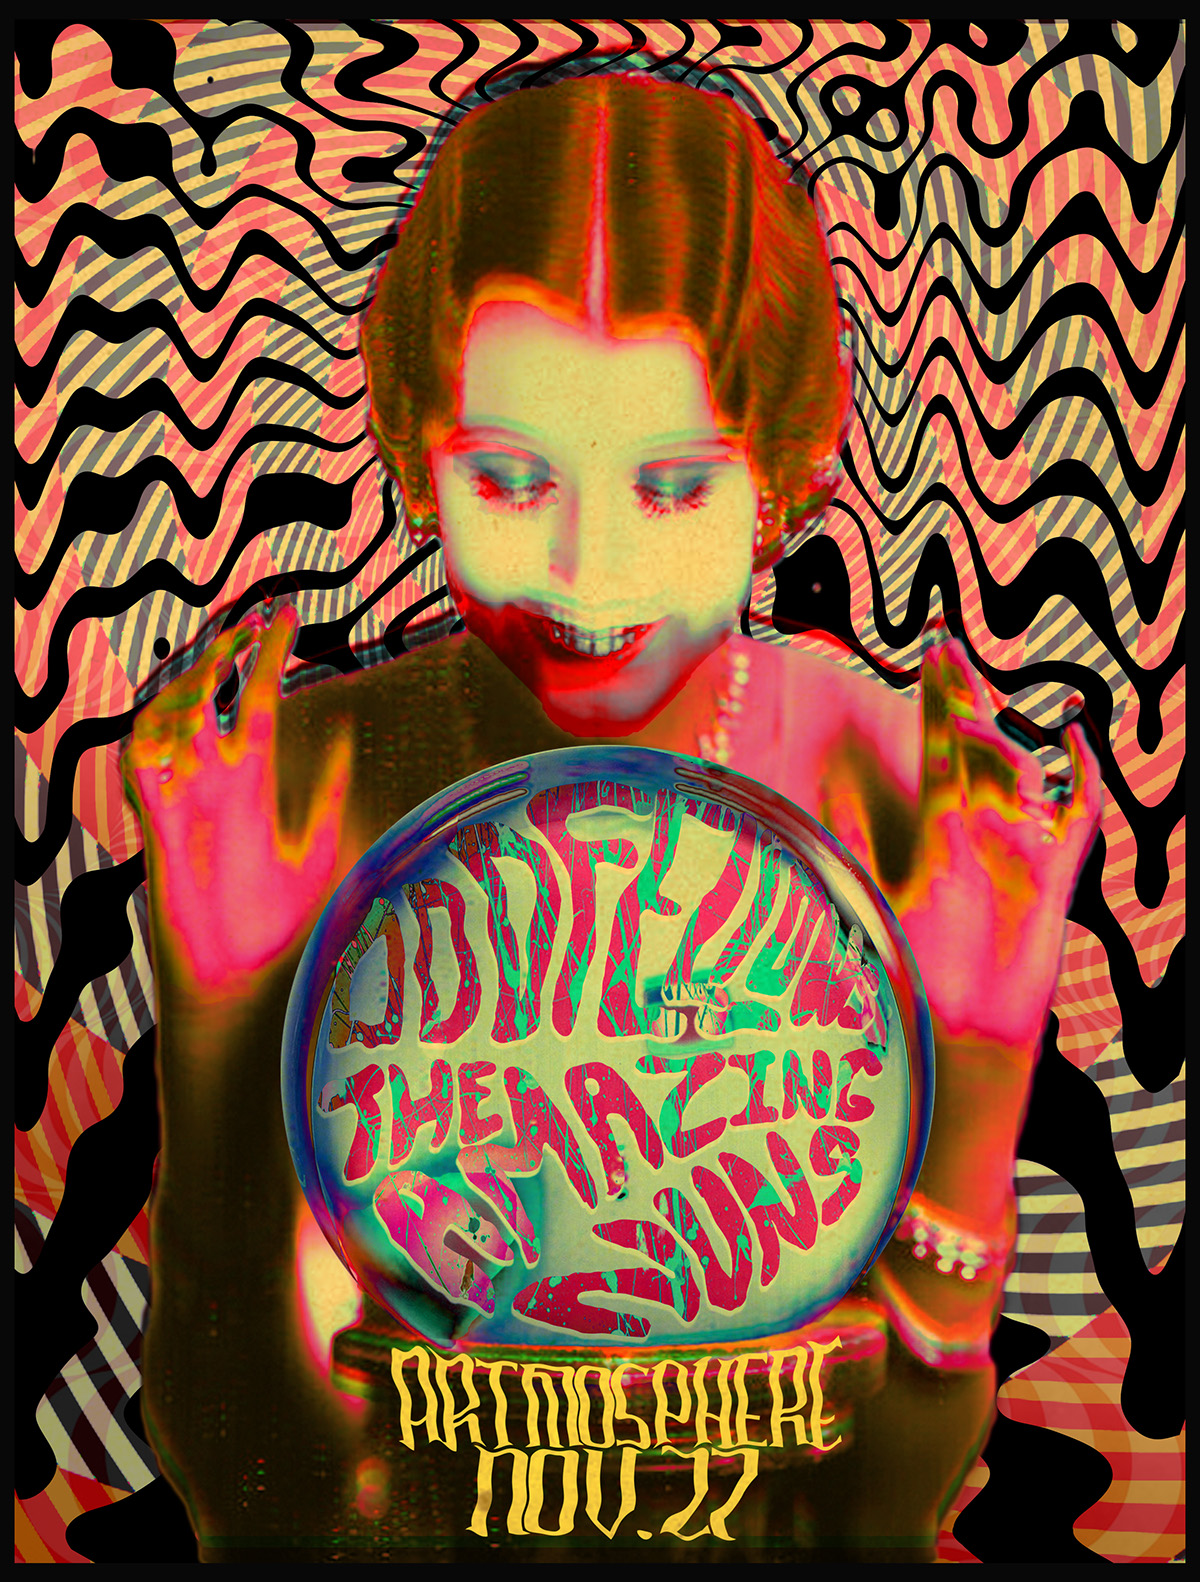 psychedelic furgatorio Sage crystal ball woman vintage flyer poster artmosphere Nashville lafayette rock oddfellows amazing nuns